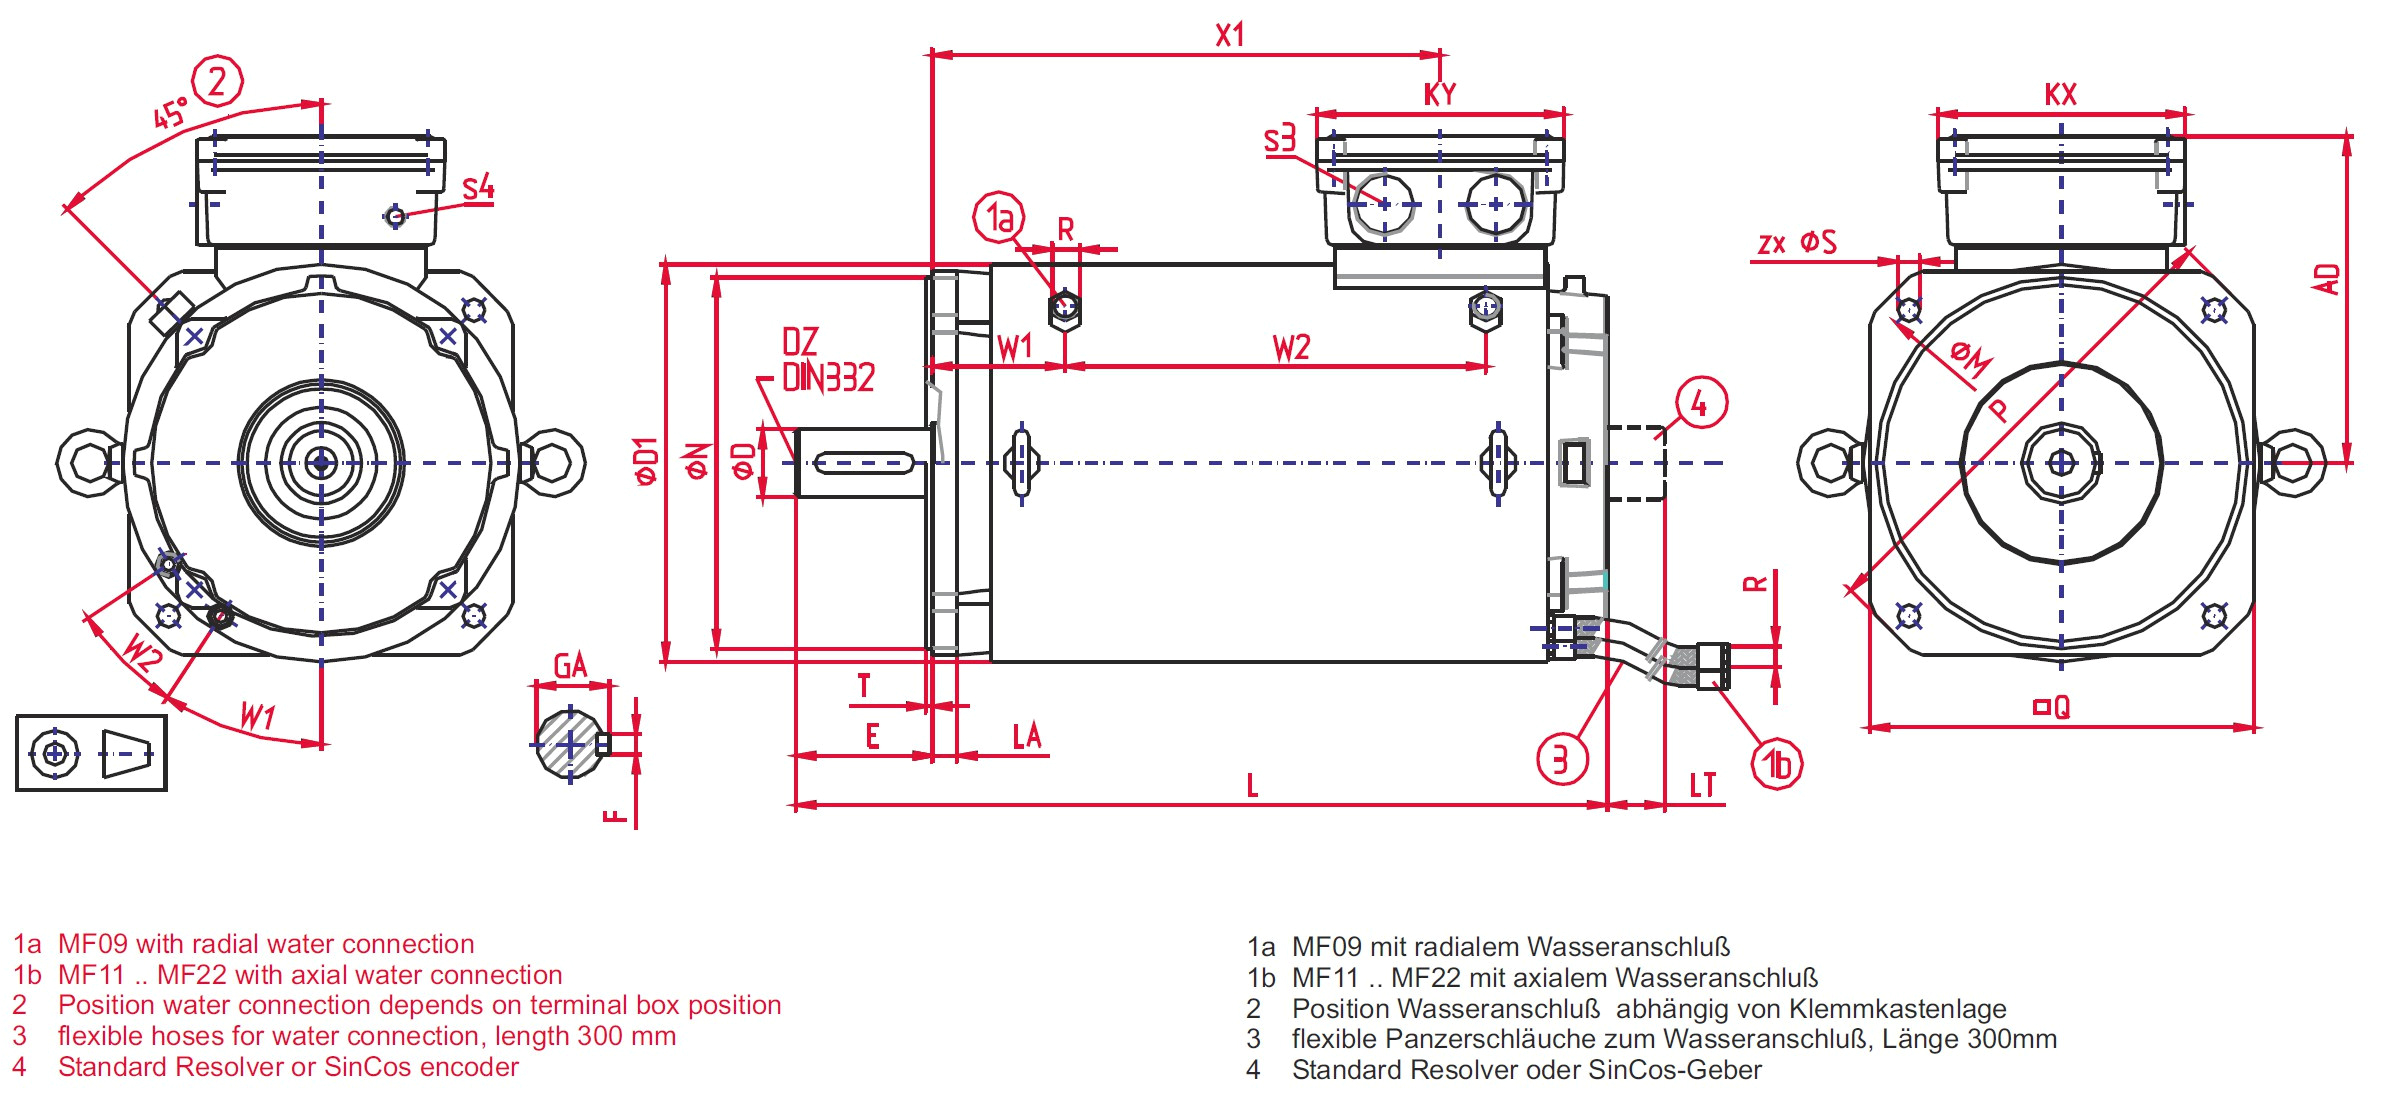 single phase ac motor wiring diagram inspirational 3 phase motor terminal box electrical schematics car wiring